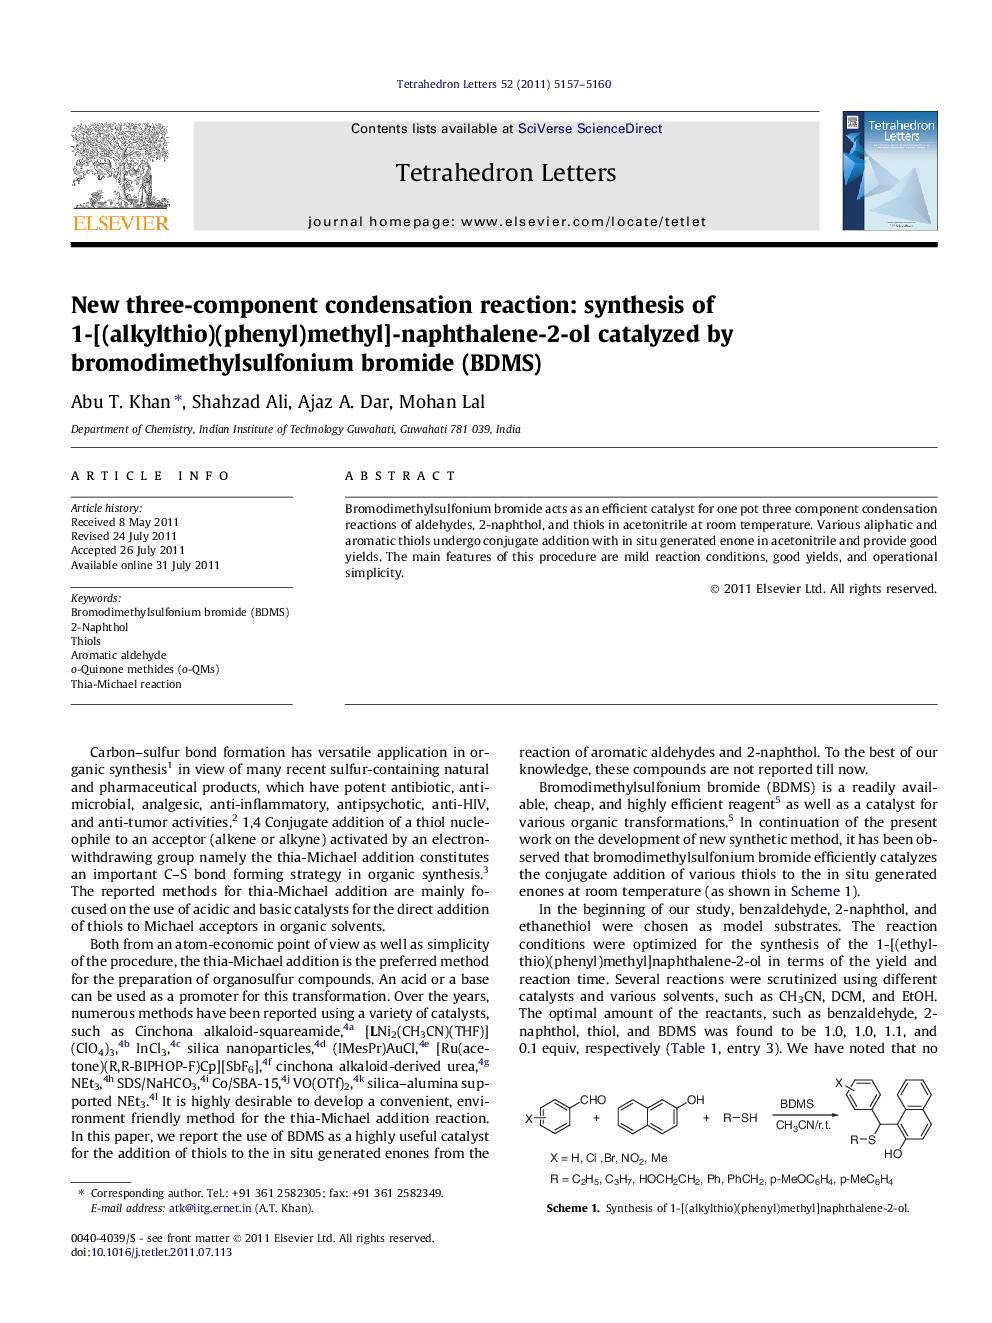 New three-component condensation reaction: synthesis of 1-[(alkylthio)(phenyl)methyl]-naphthalene-2-ol catalyzed by bromodimethylsulfonium bromide (BDMS)